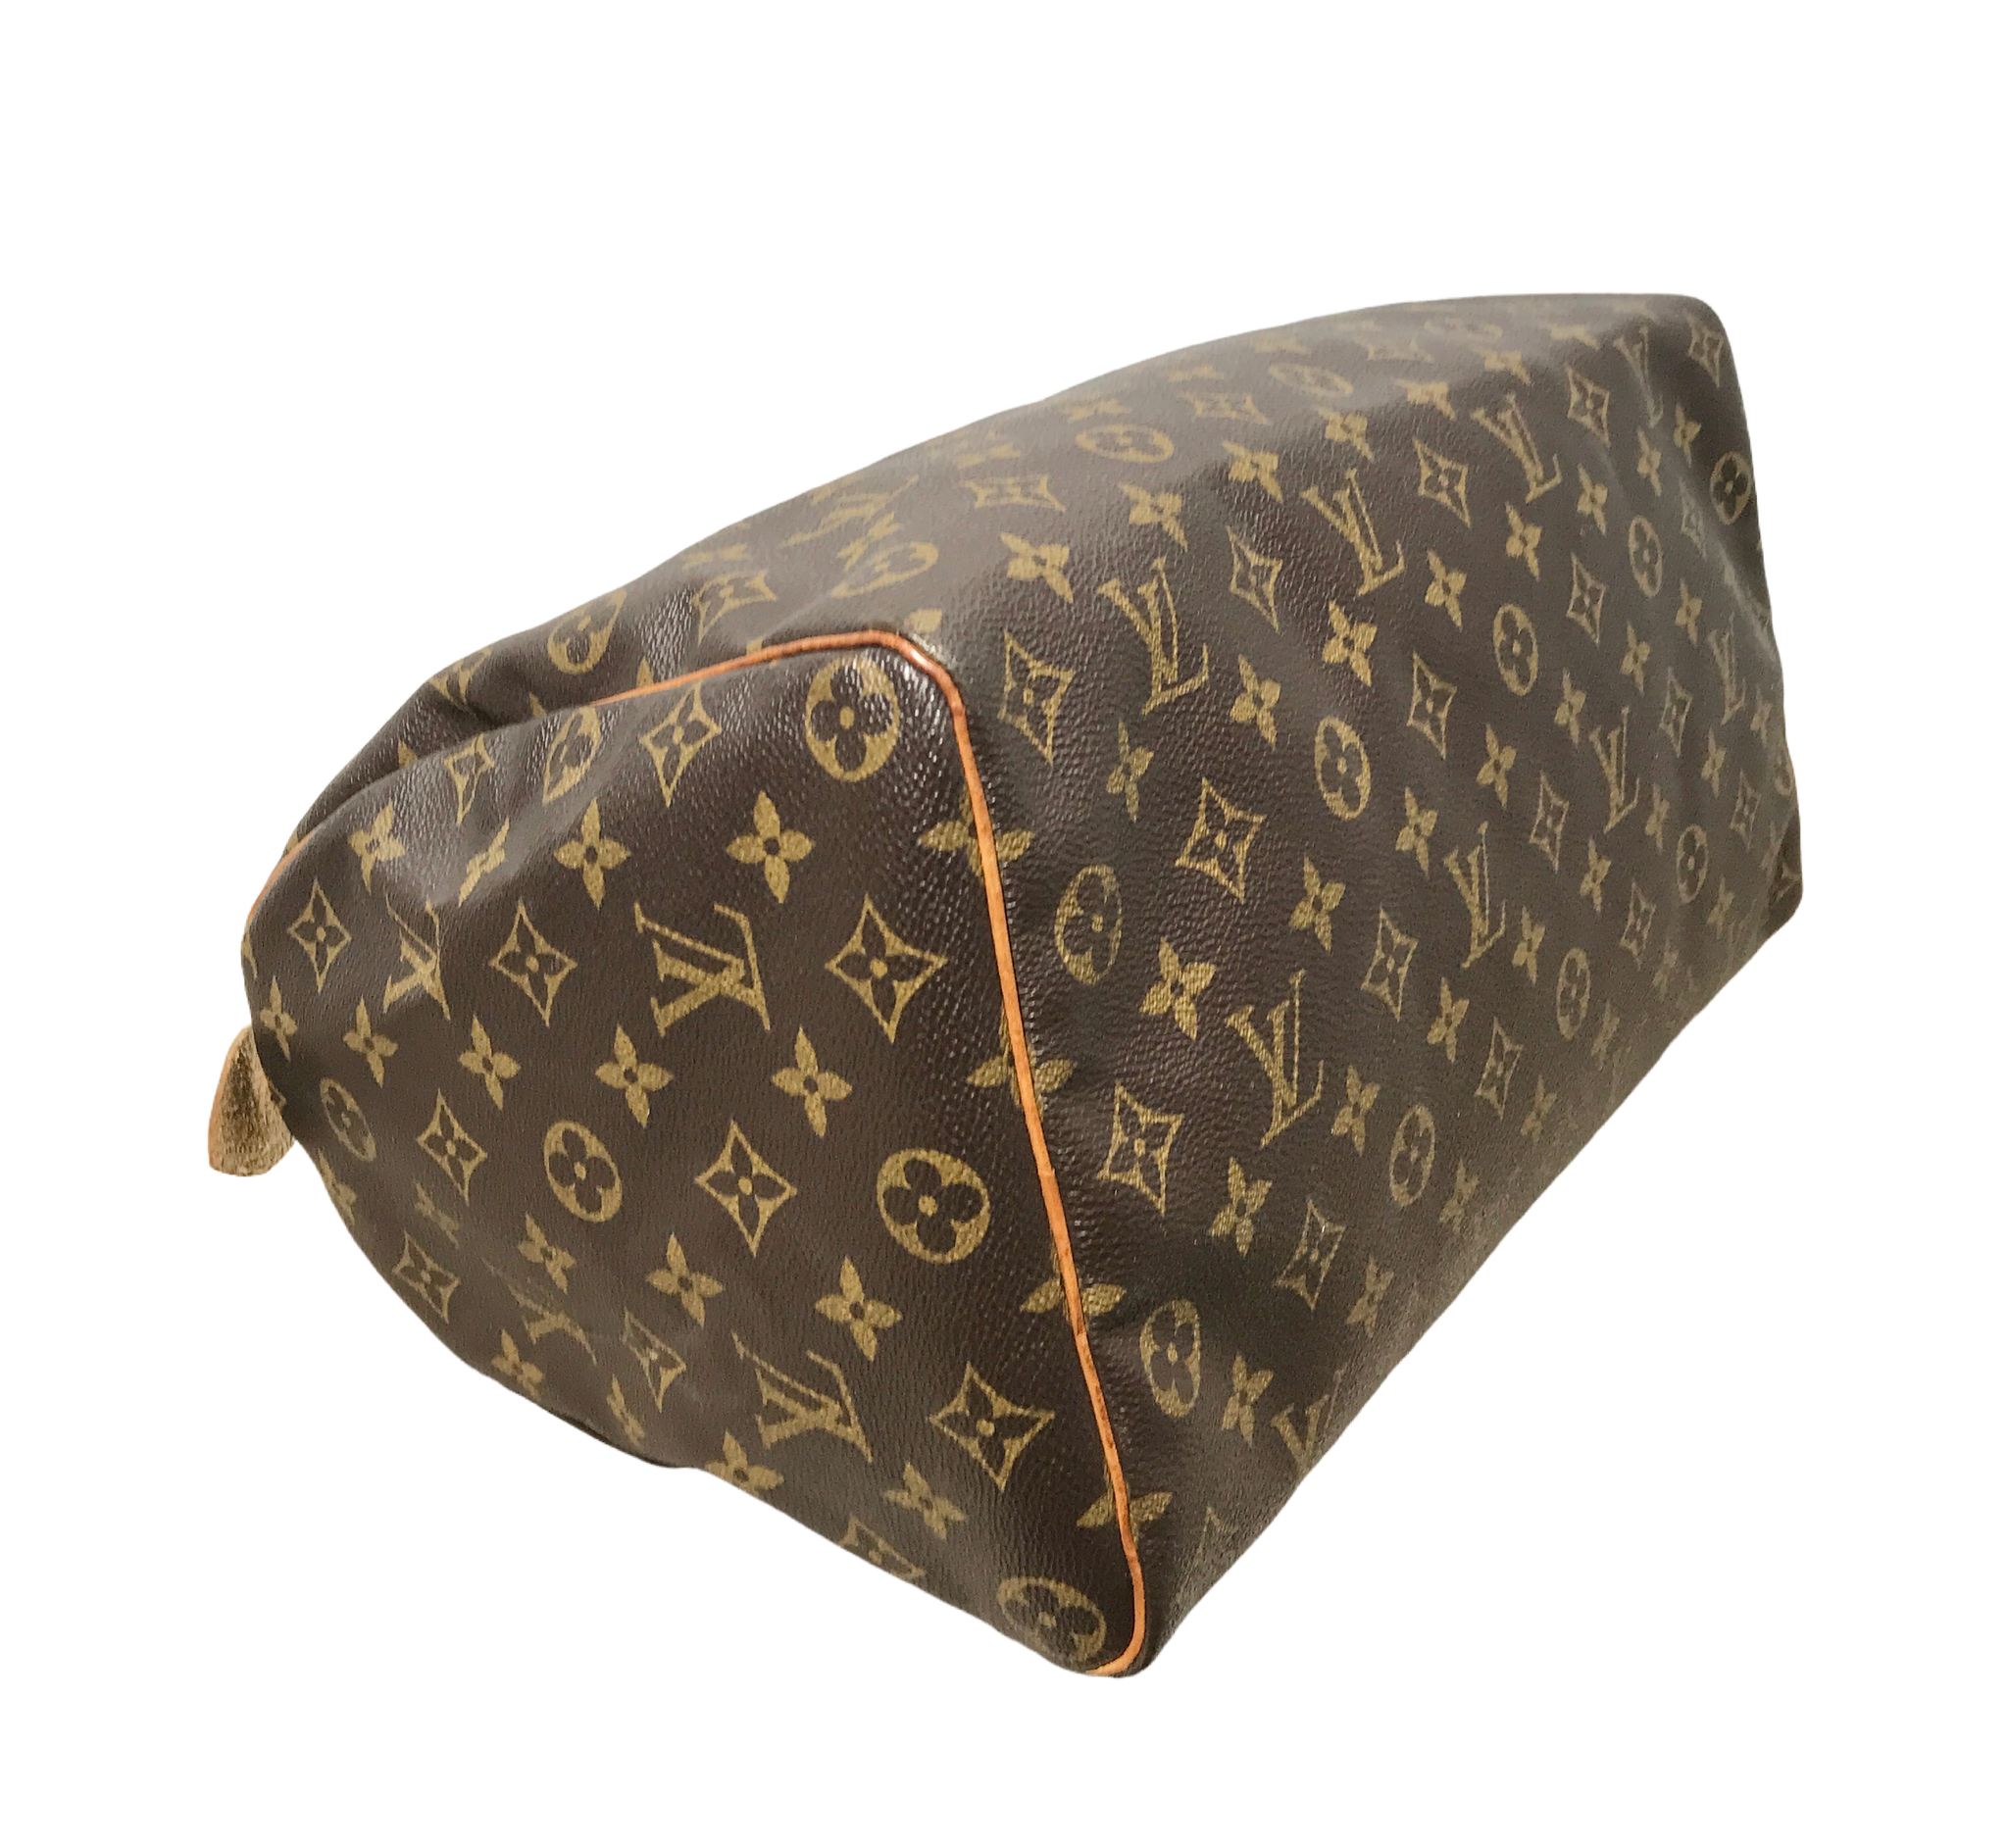 Louis Vuitton Speedy 35 Monogram Top Handle Bag on SALE